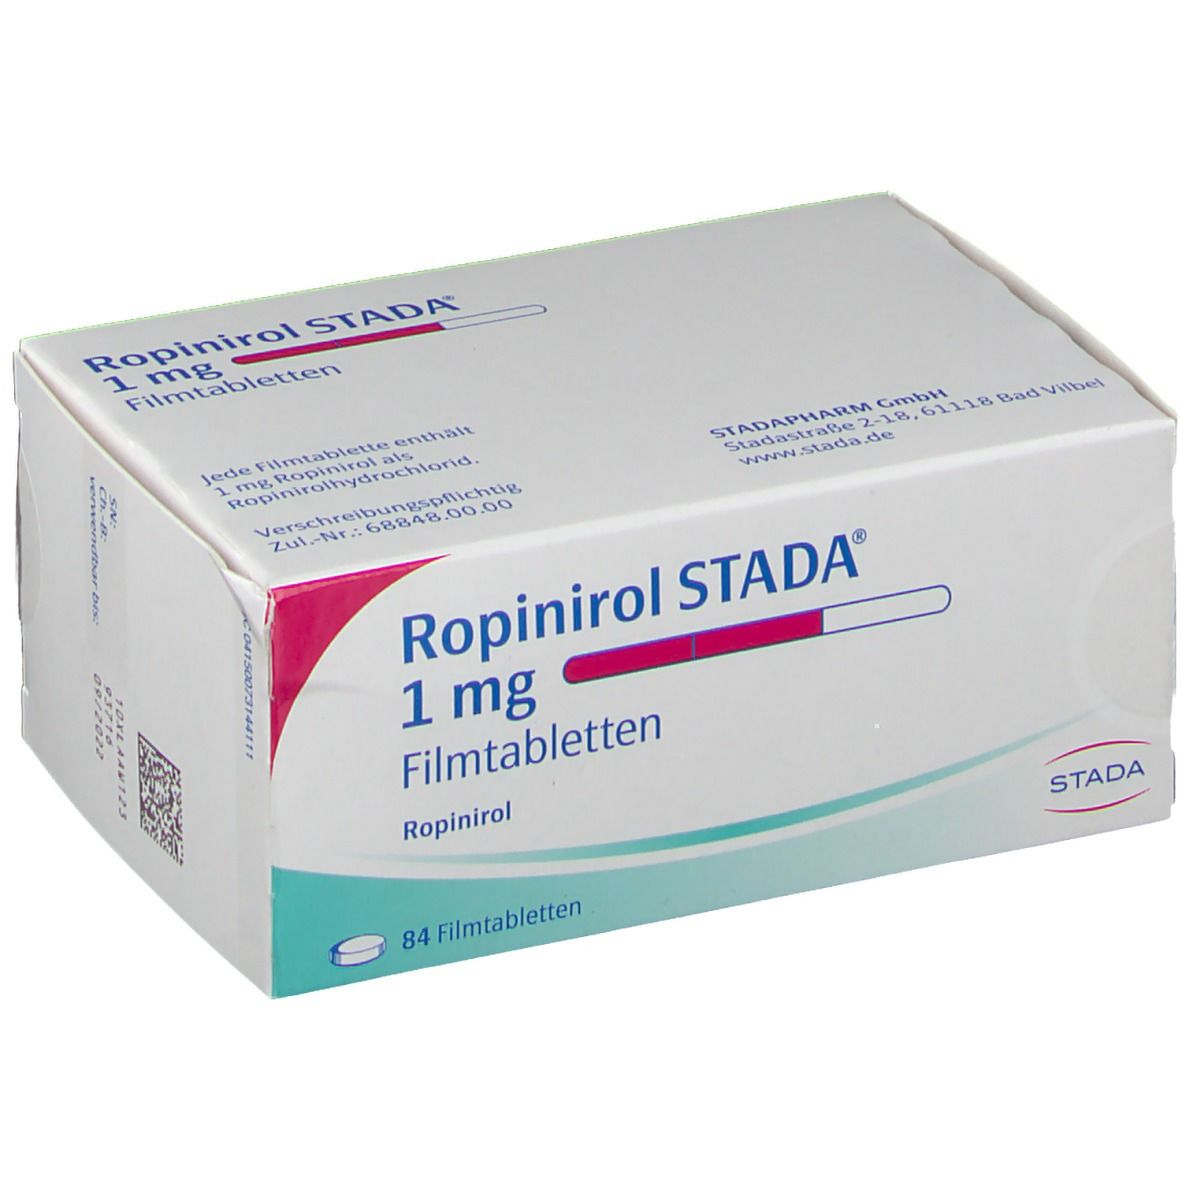 Ropinirol STADA® 1 mg